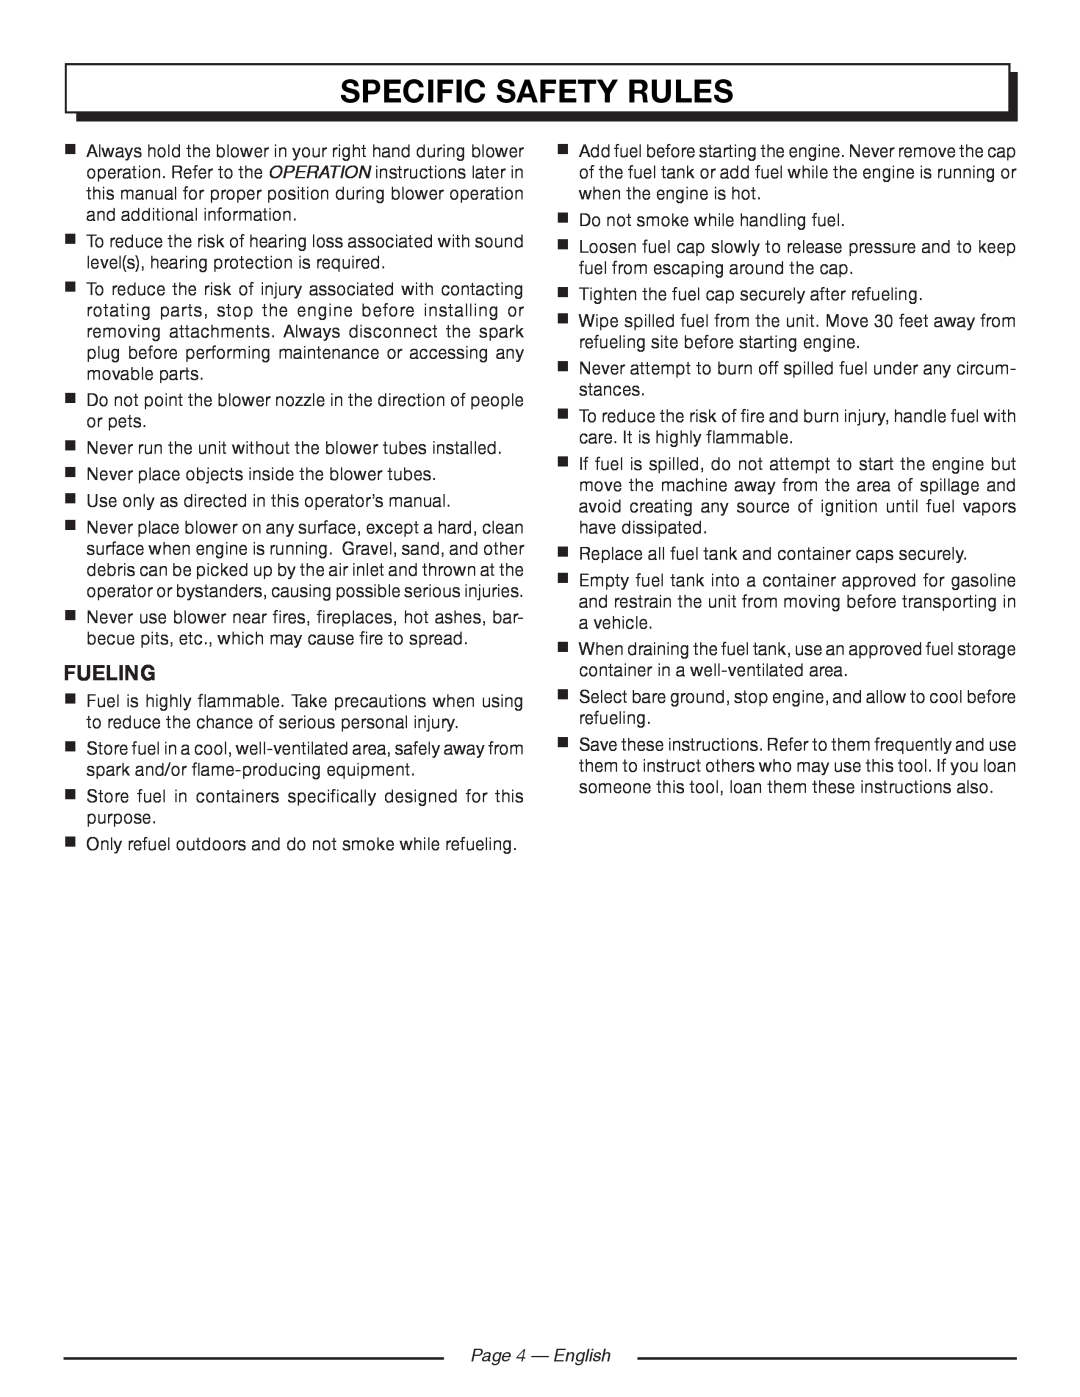 Homelite UT09520 manuel dutilisation Specific Safety Rules, Fueling, Page 4 - English 